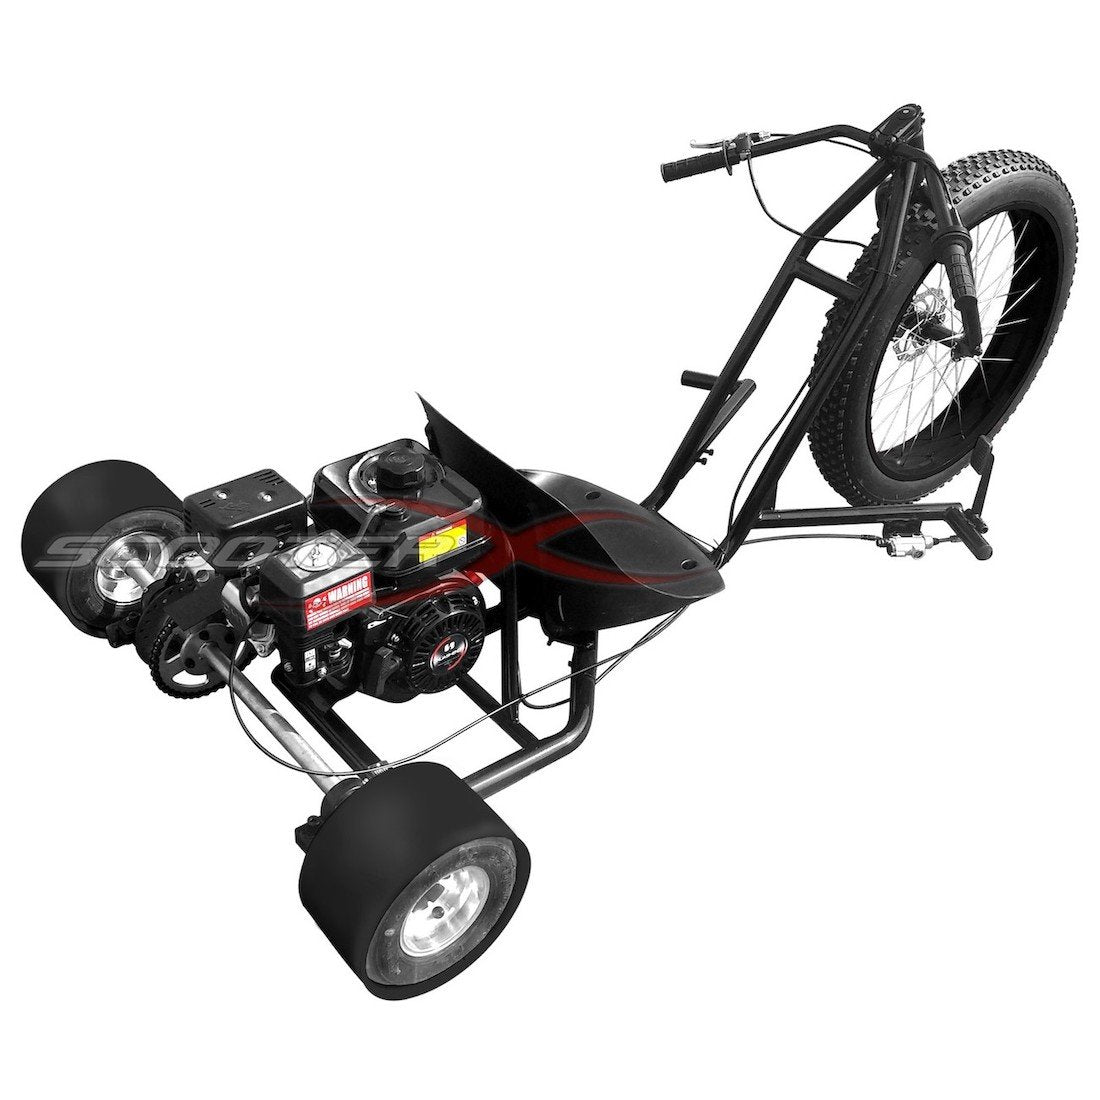 196cc dirt bike go kart mobility scooter motorized racing used drift trike  - AliExpress